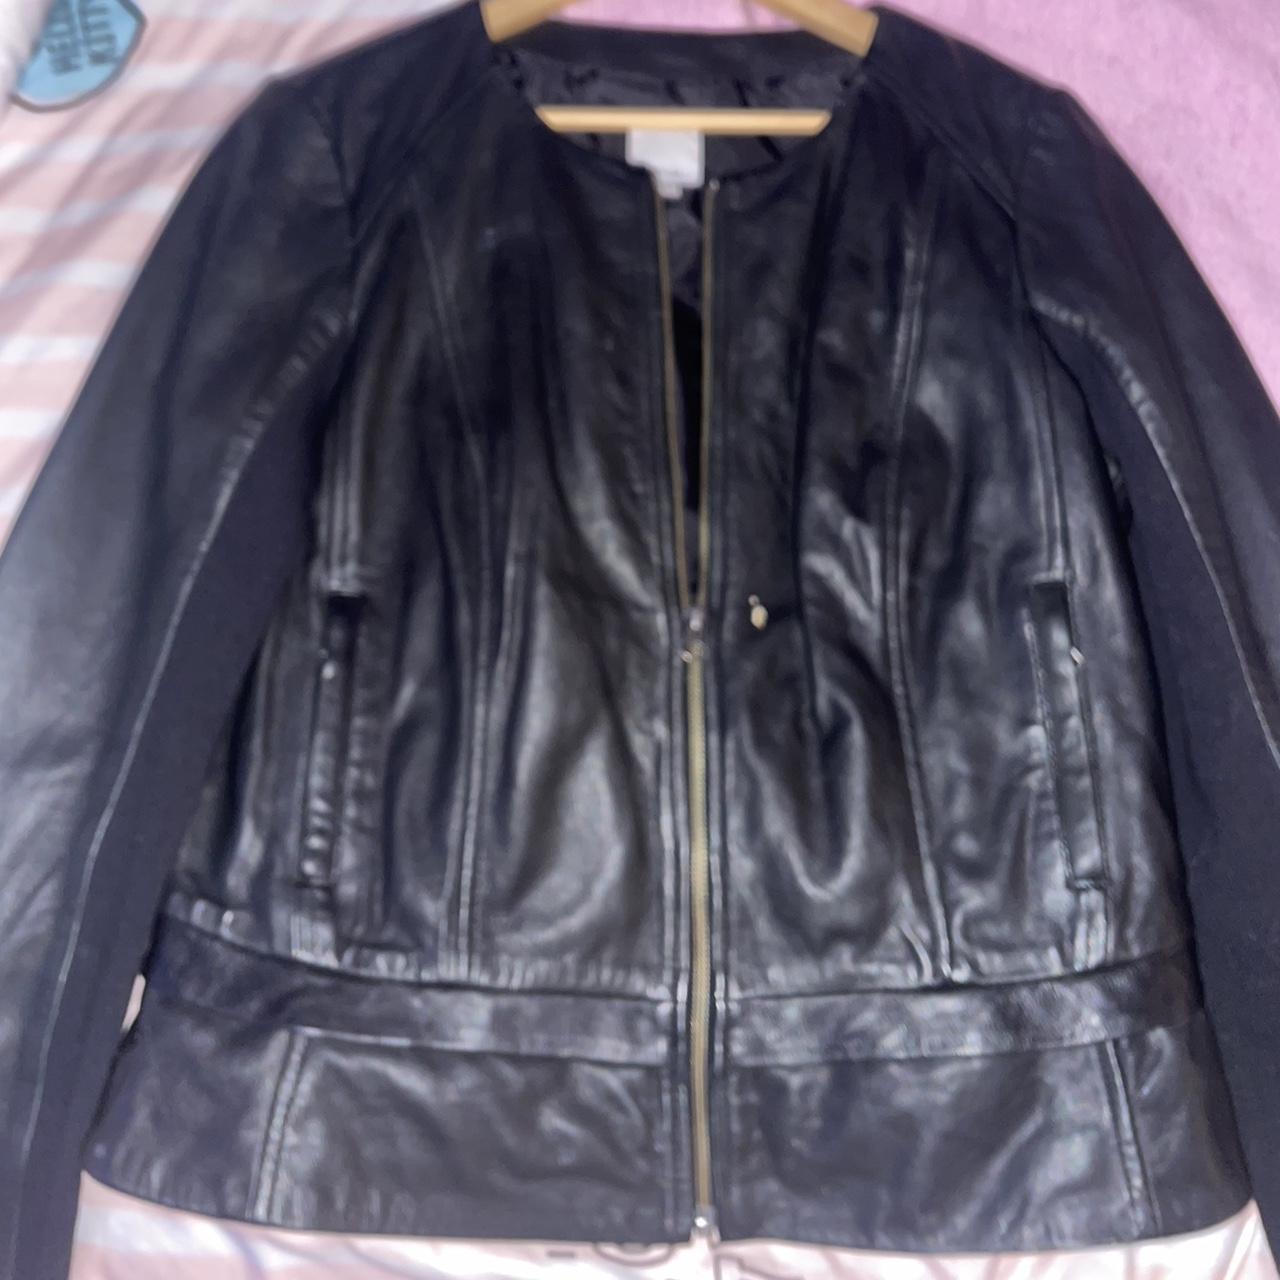 Supreme Playboy Leather Jacket - RockStar Jacket